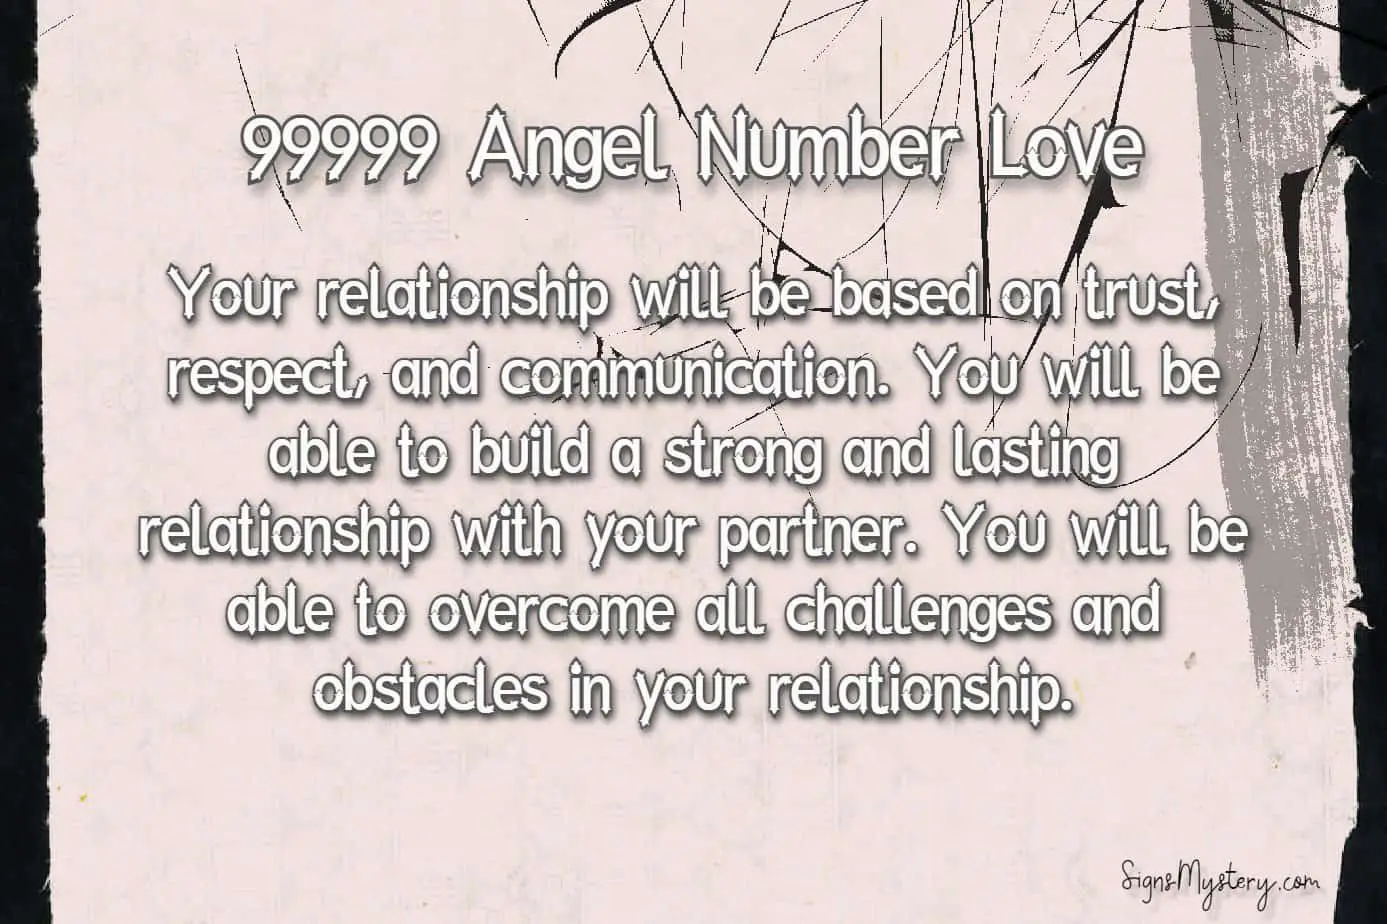 99999 angel number love